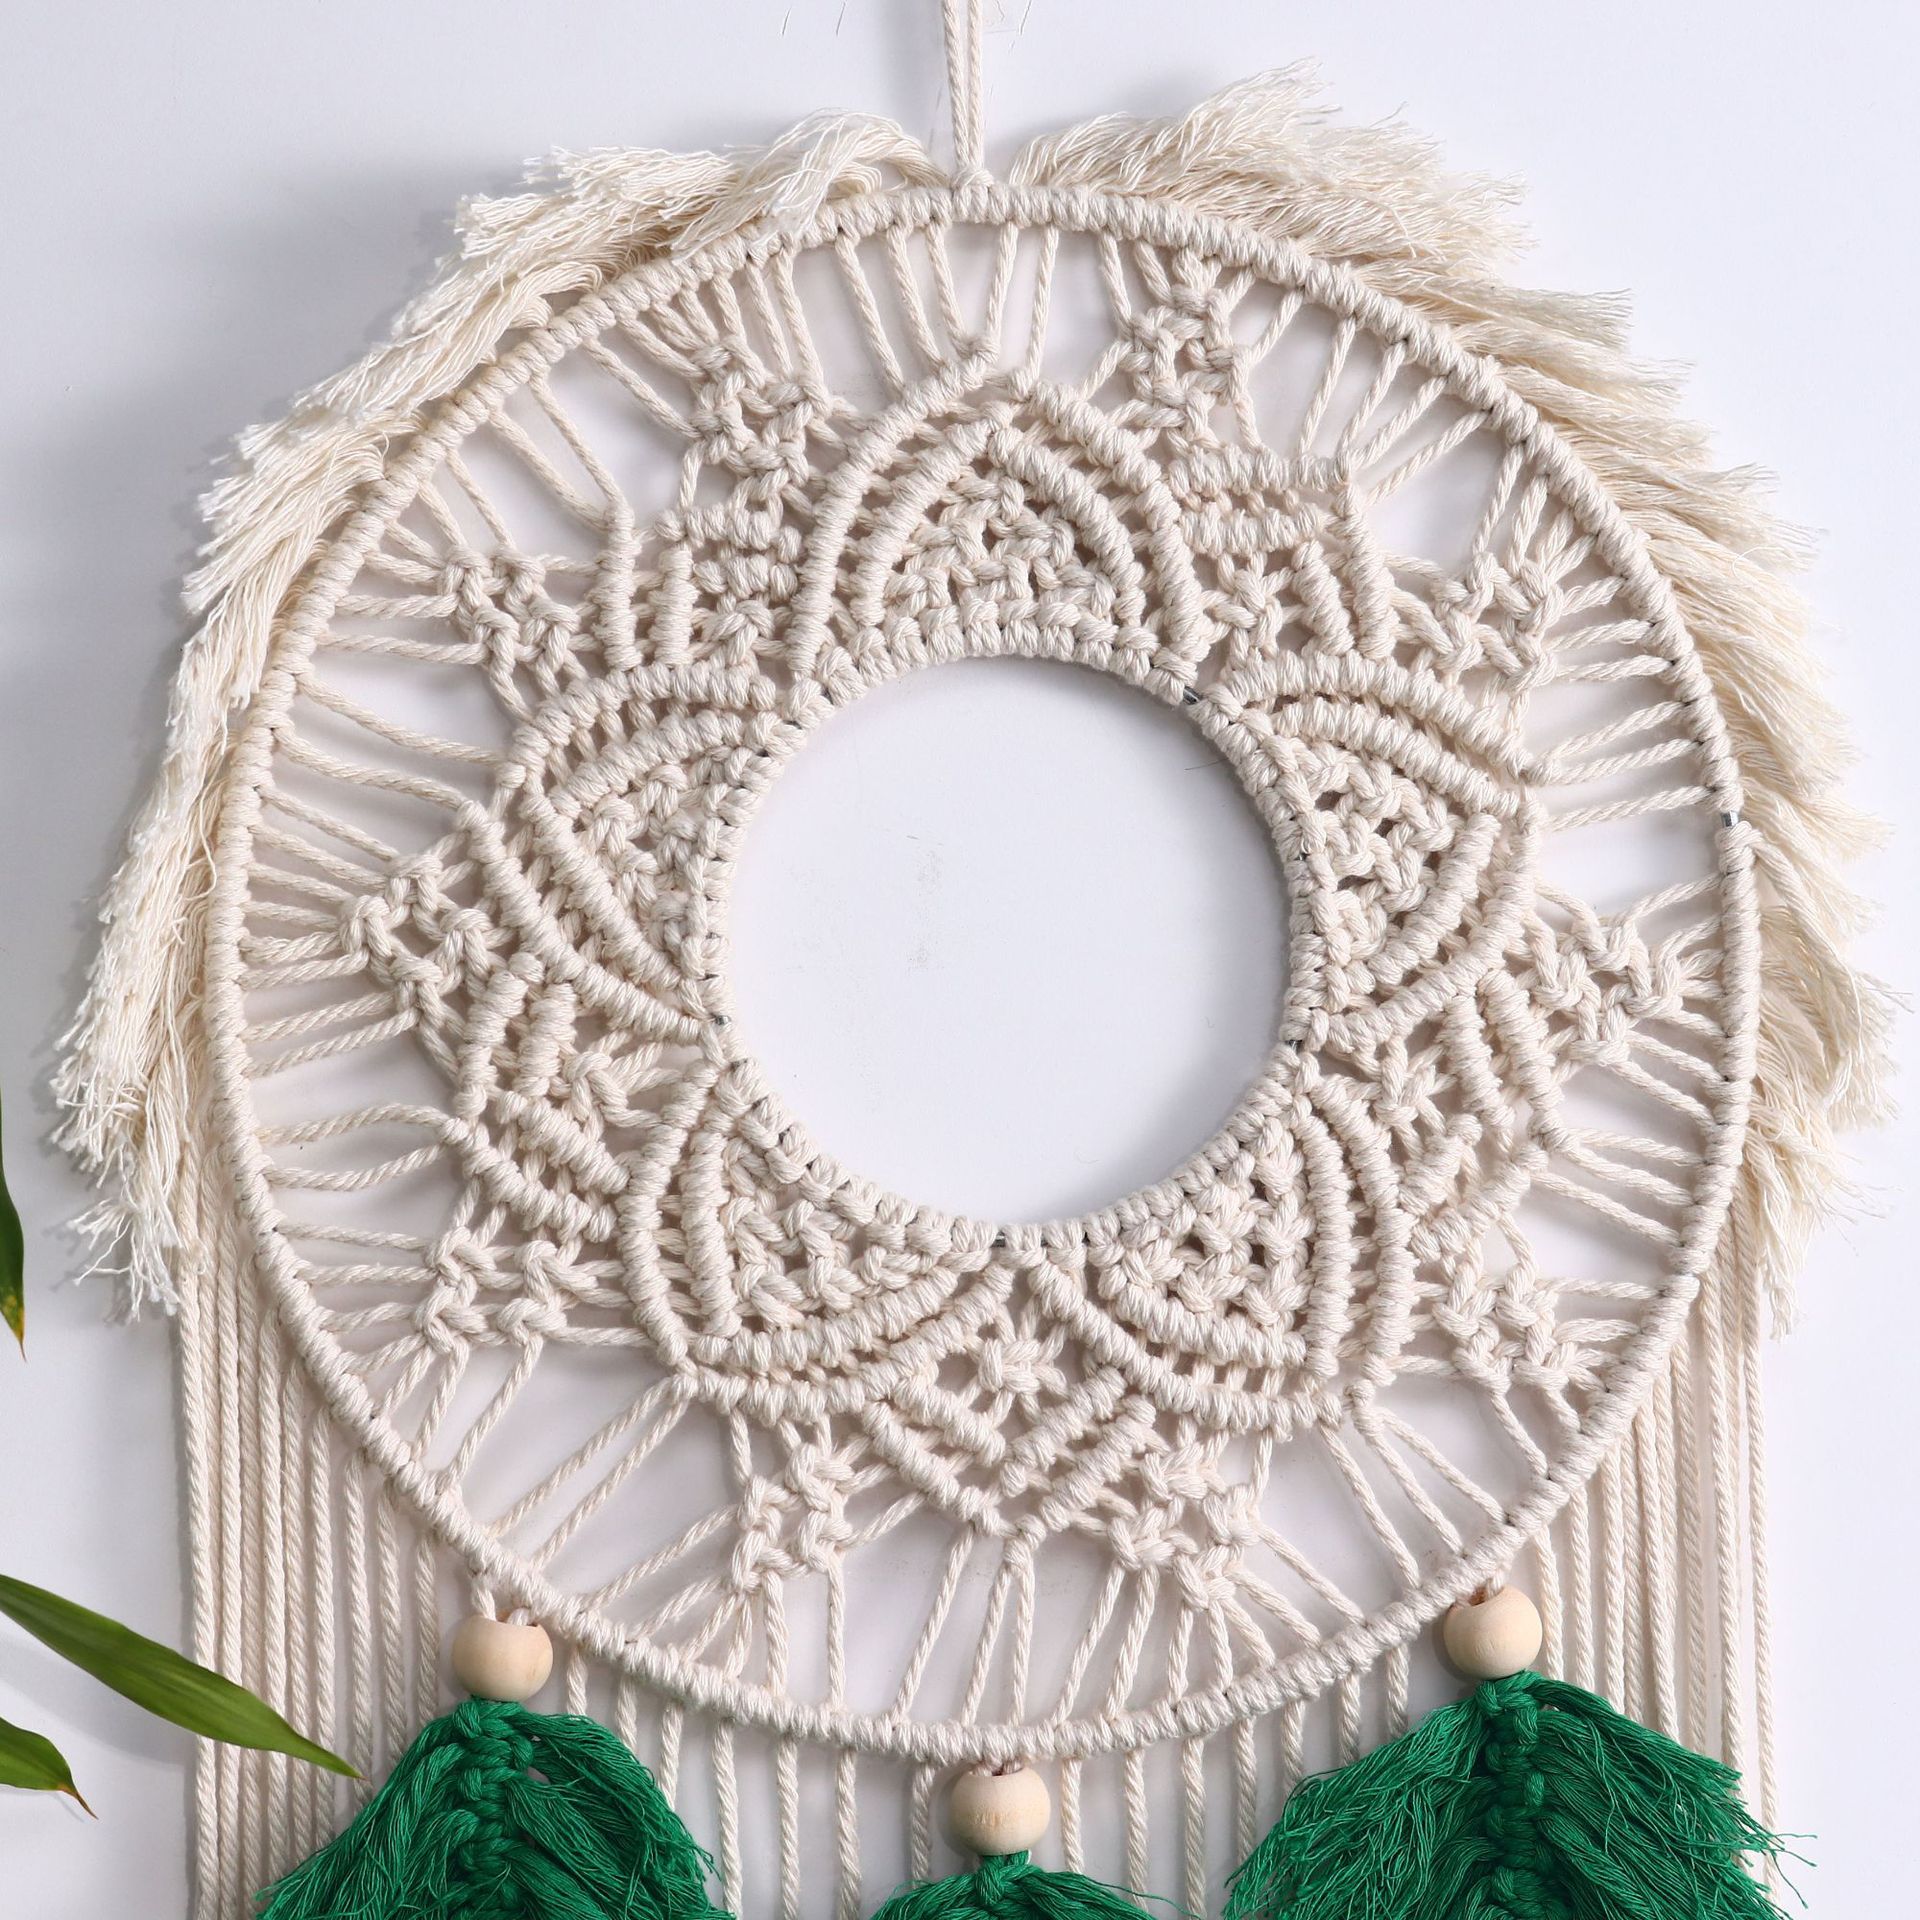 Hand-Woven Wall Hanging round Dreamcatcher Boho Tassel Decorative Circle Creative Cotton String